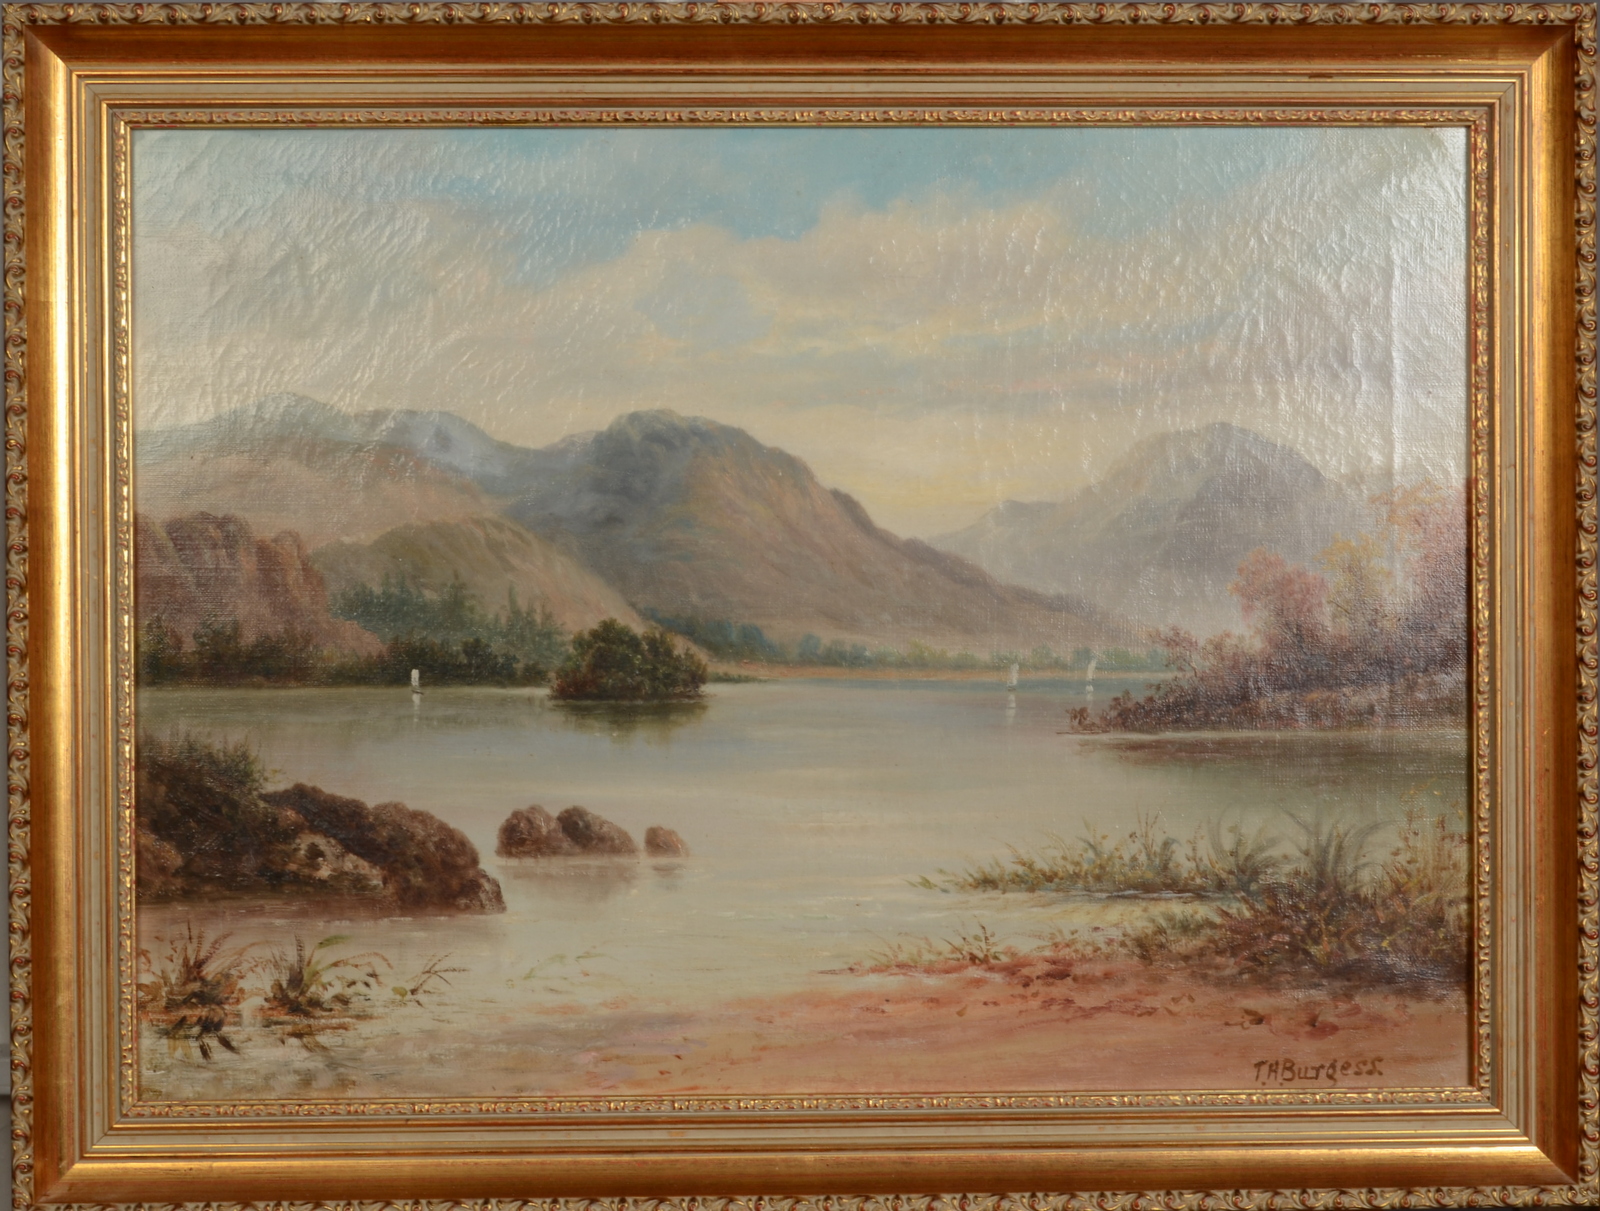 T H BURGESS A Lakeland Landscape Oil on canvas Signed 39 x 55 cm - Image 2 of 2